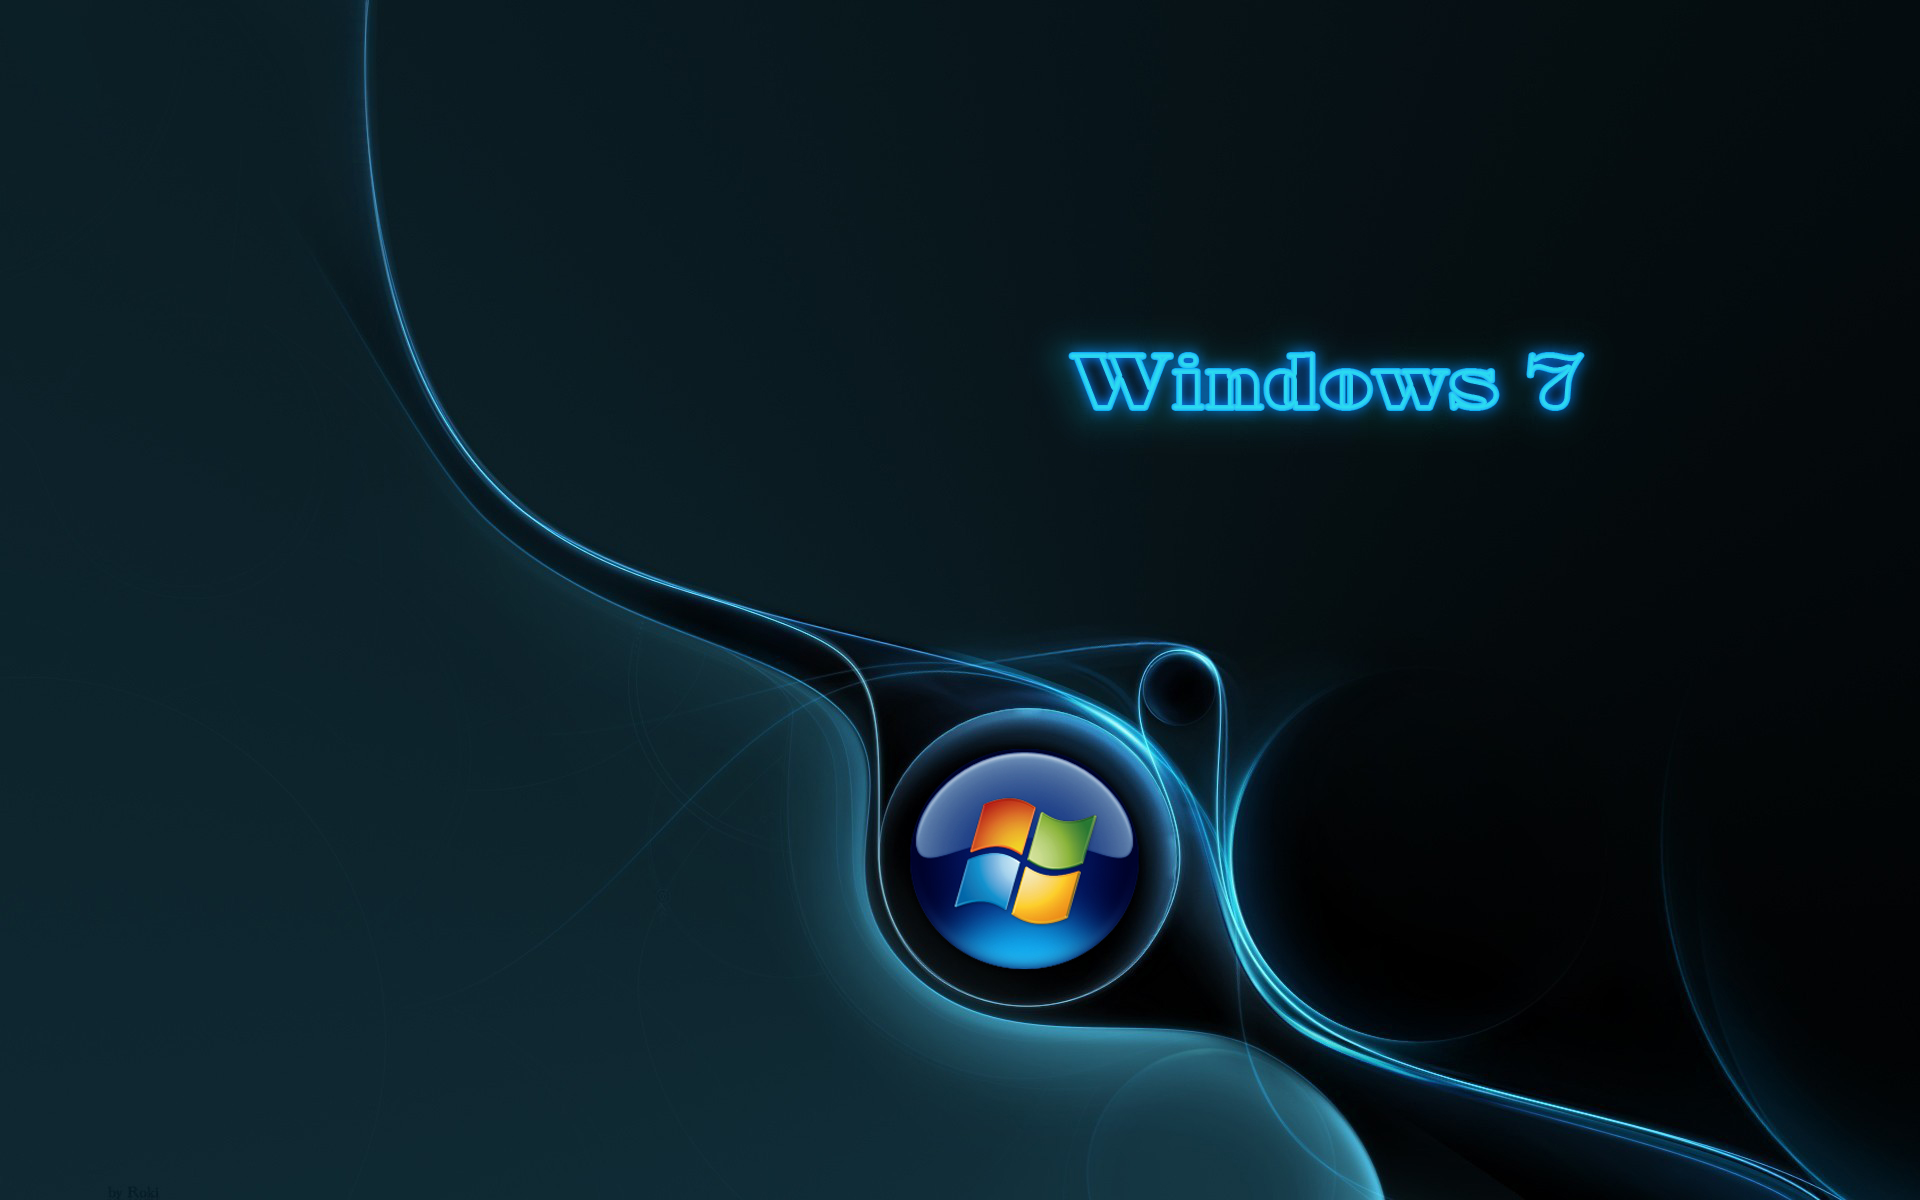 Windows 7 Wallpapers, Free Desktop Backgrounds - Wallpaper Path